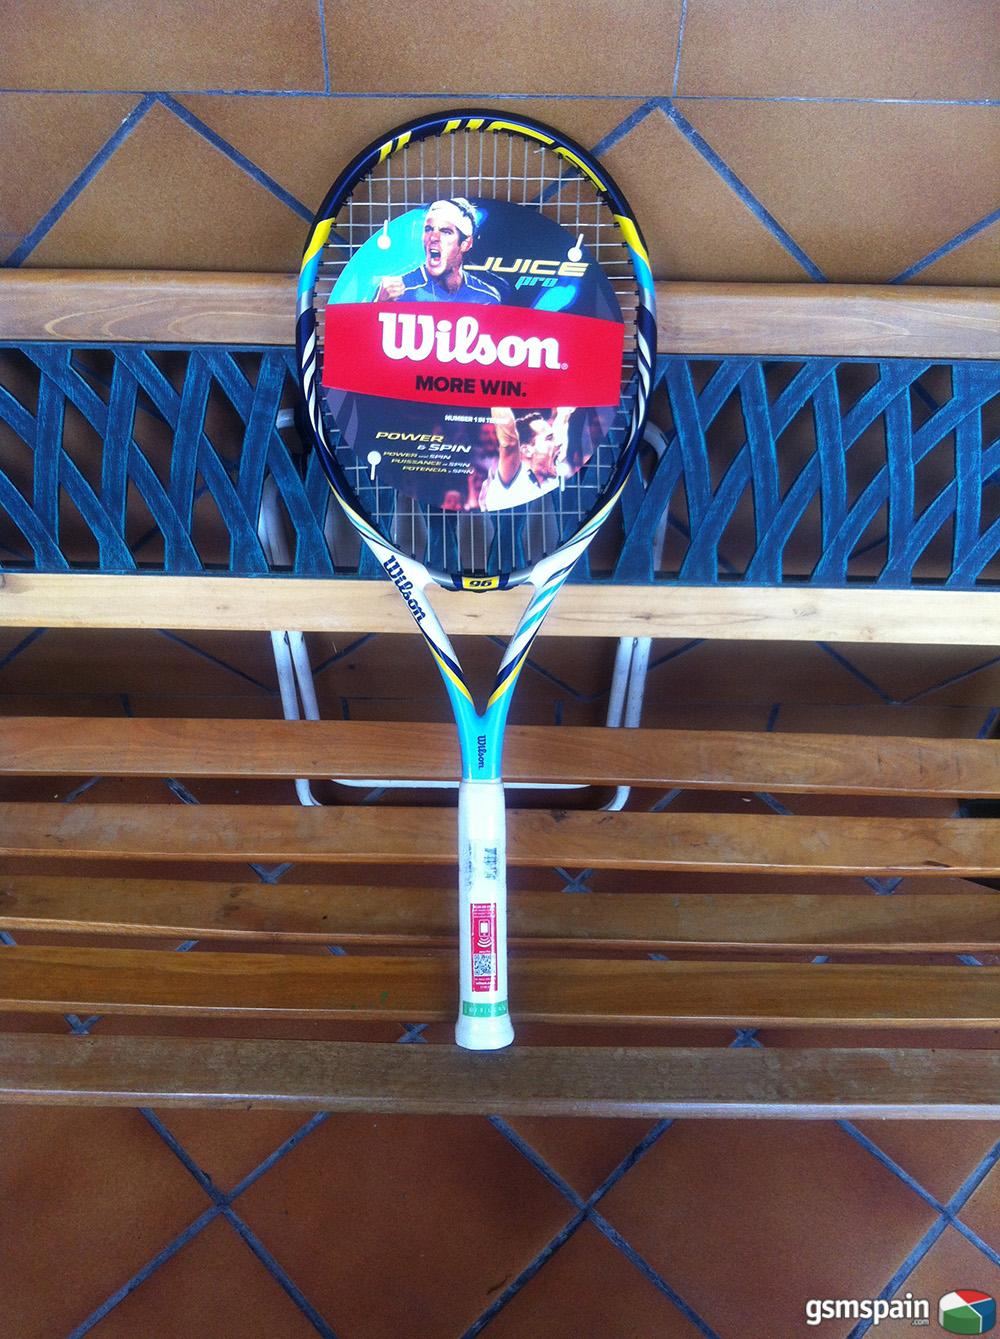 [VENDO]  Wilson blx juice pro 96 sin usar L3 raqueta tenis